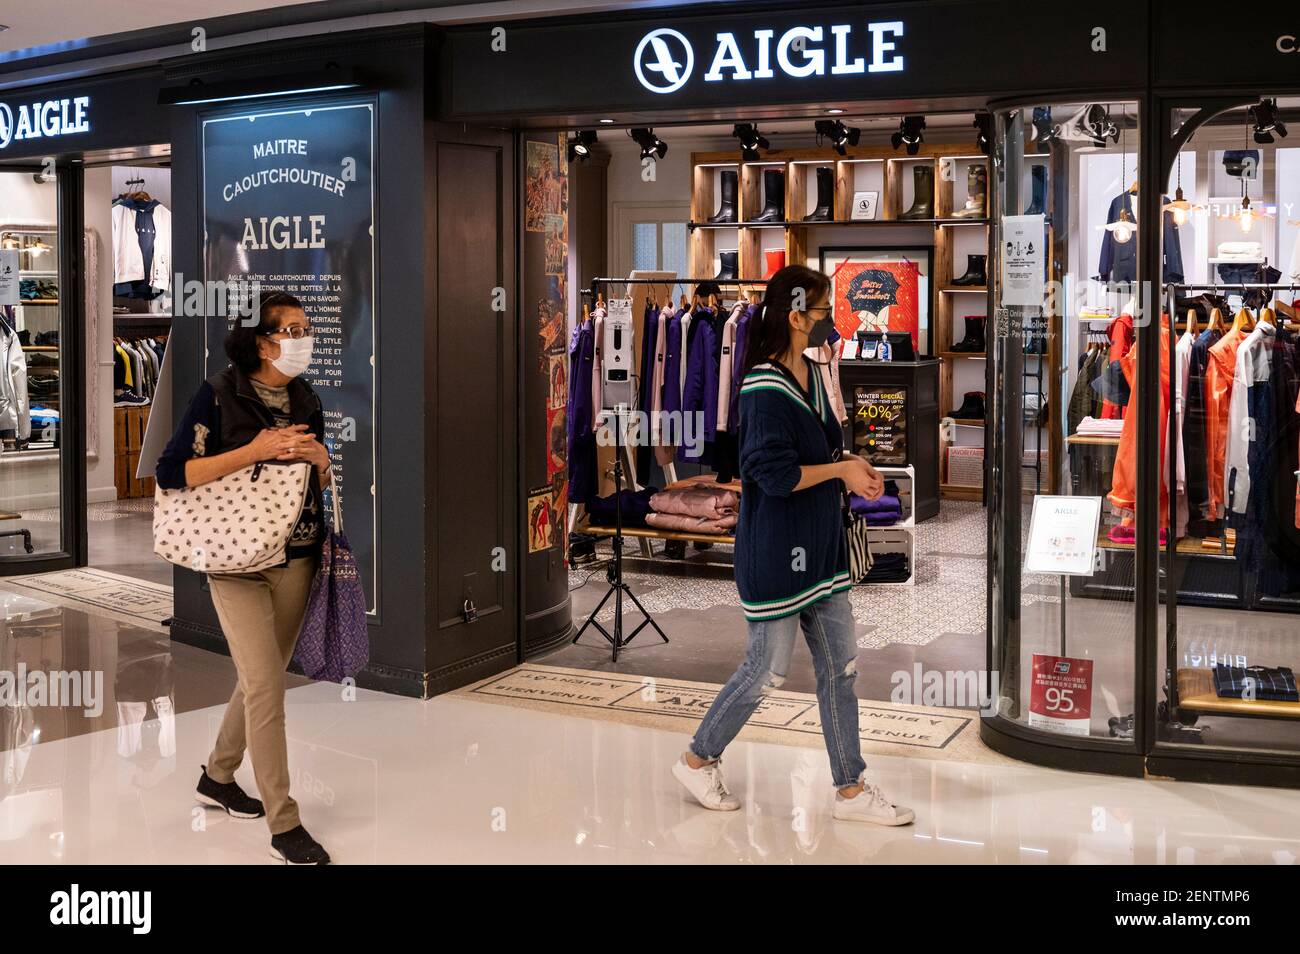 French fashion brand, Aigle store seen in Hong Kong Stock Photo - Alamy